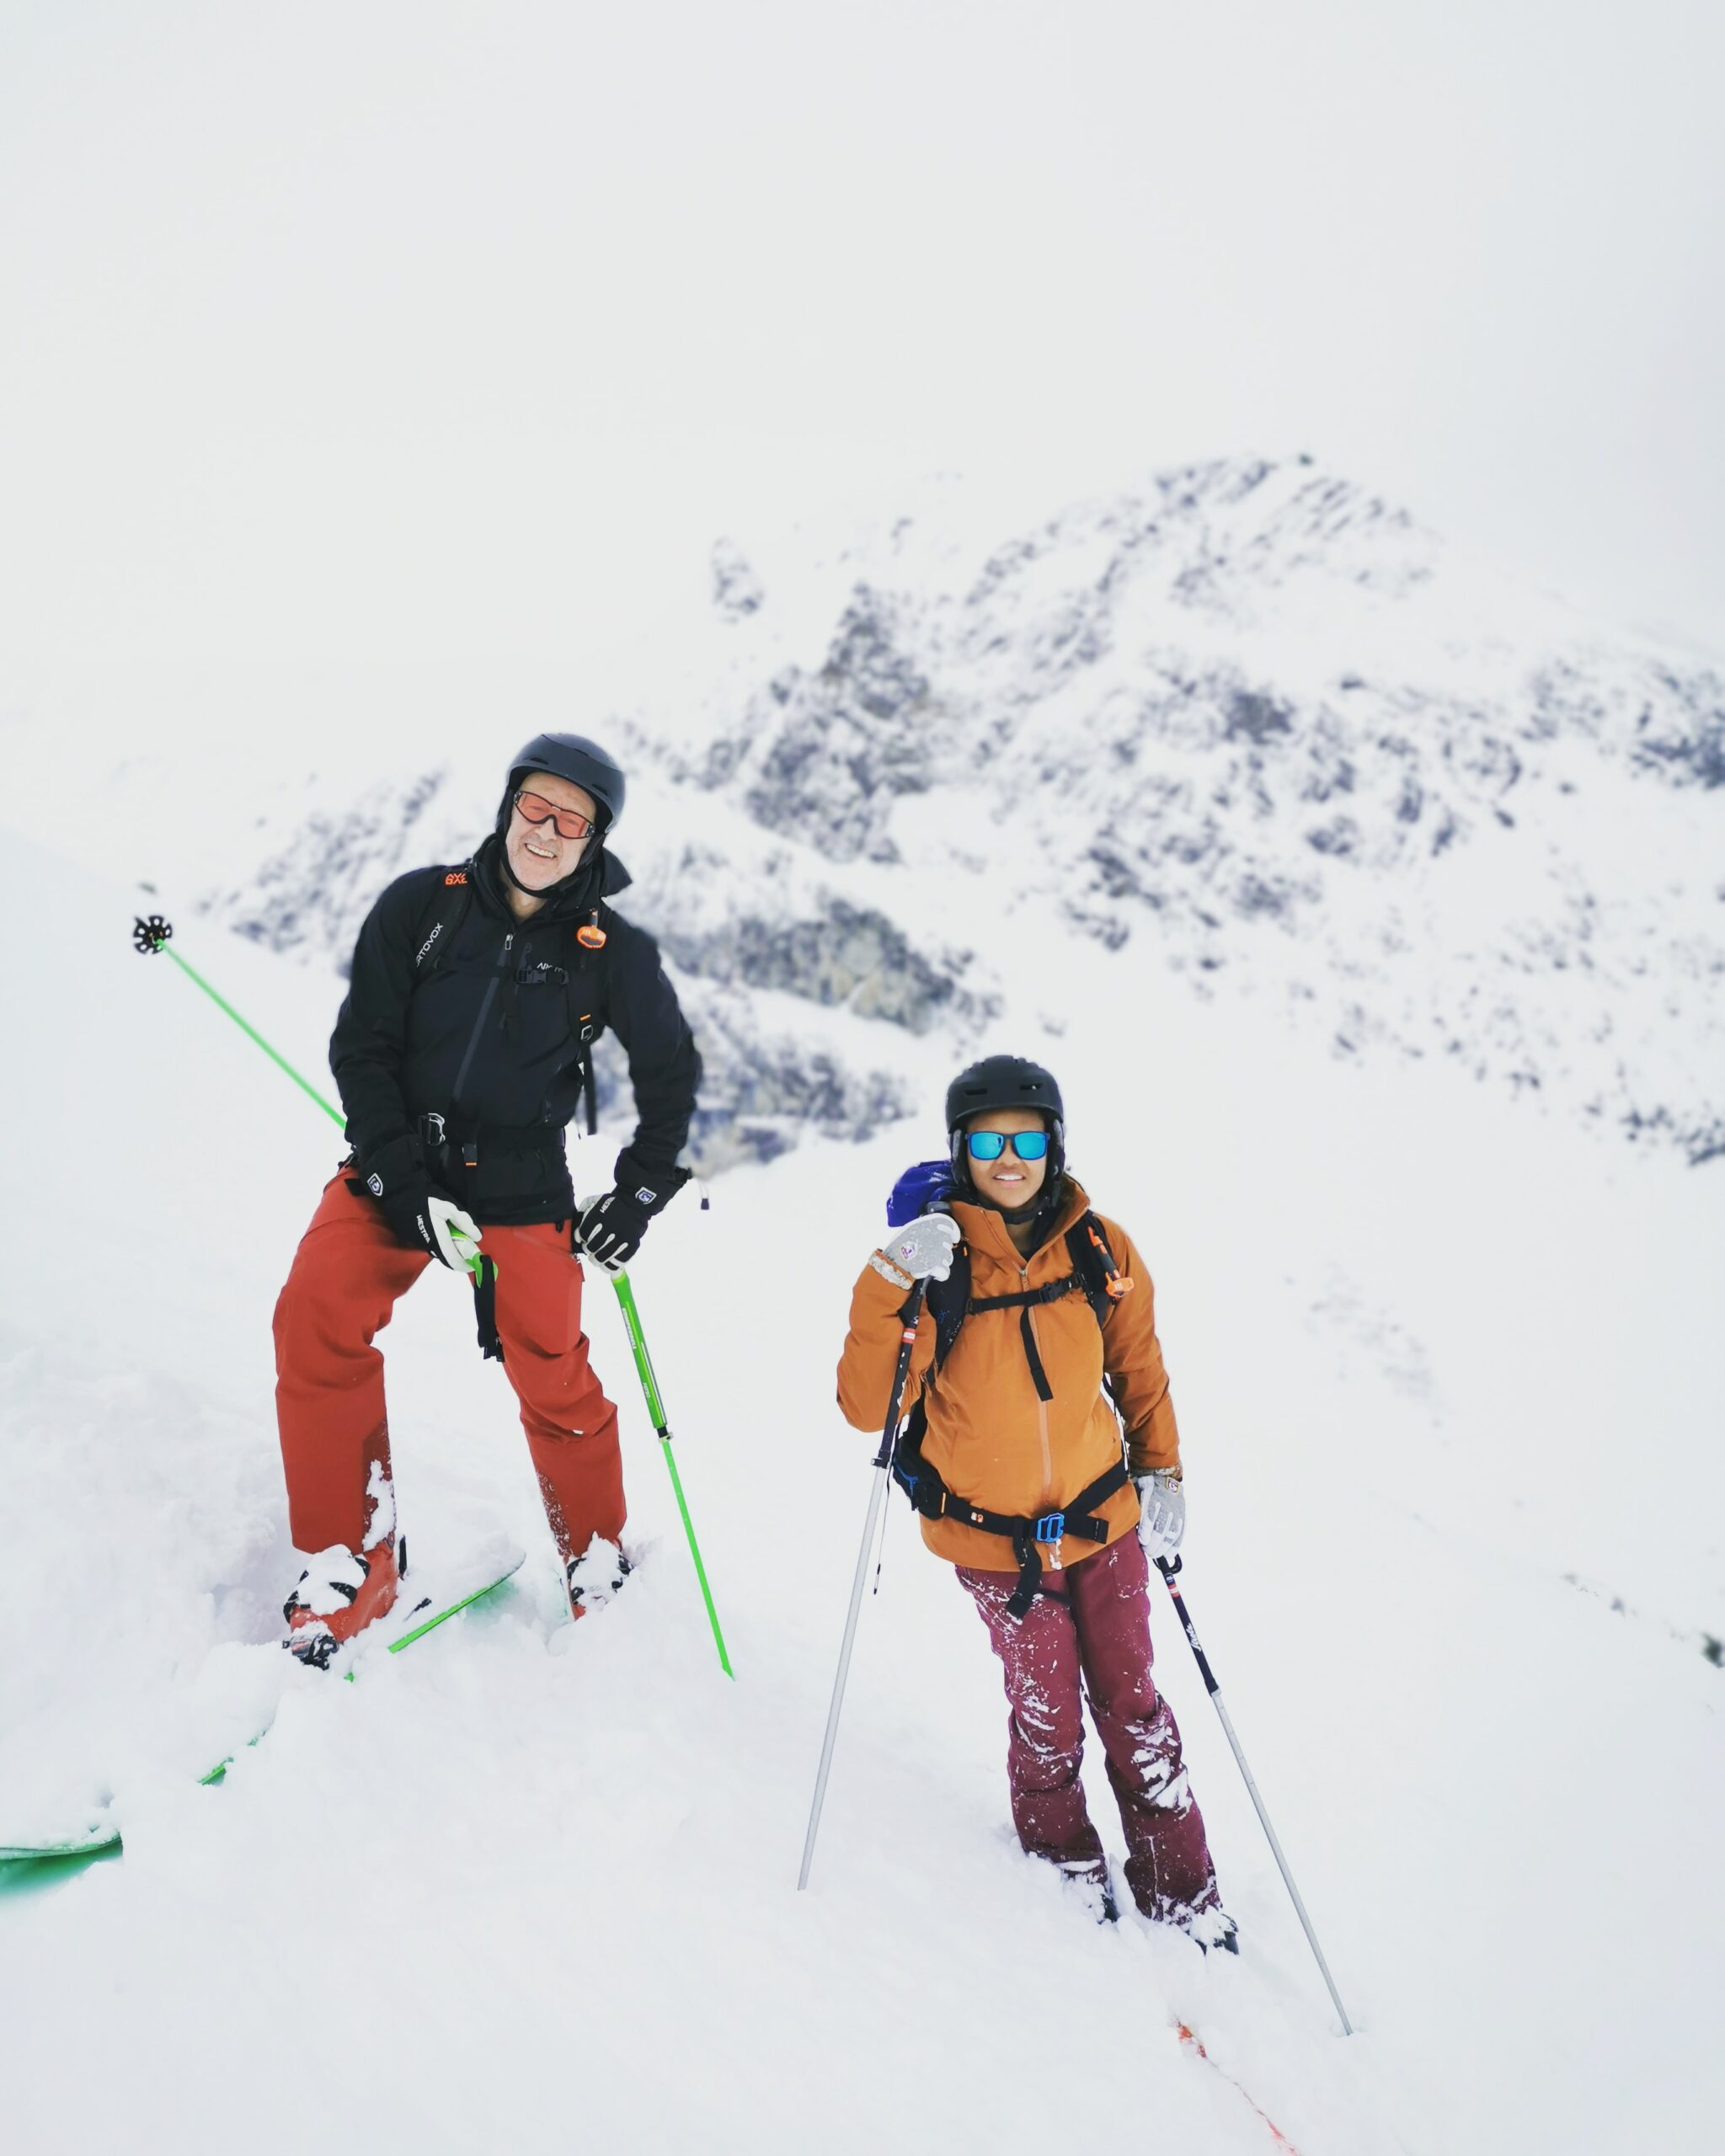 Skiguide Arlberg - Guiding - Freeriden Skitouren - Lech/Zürs, Stuben, Warth/Schröcken, St.Anton